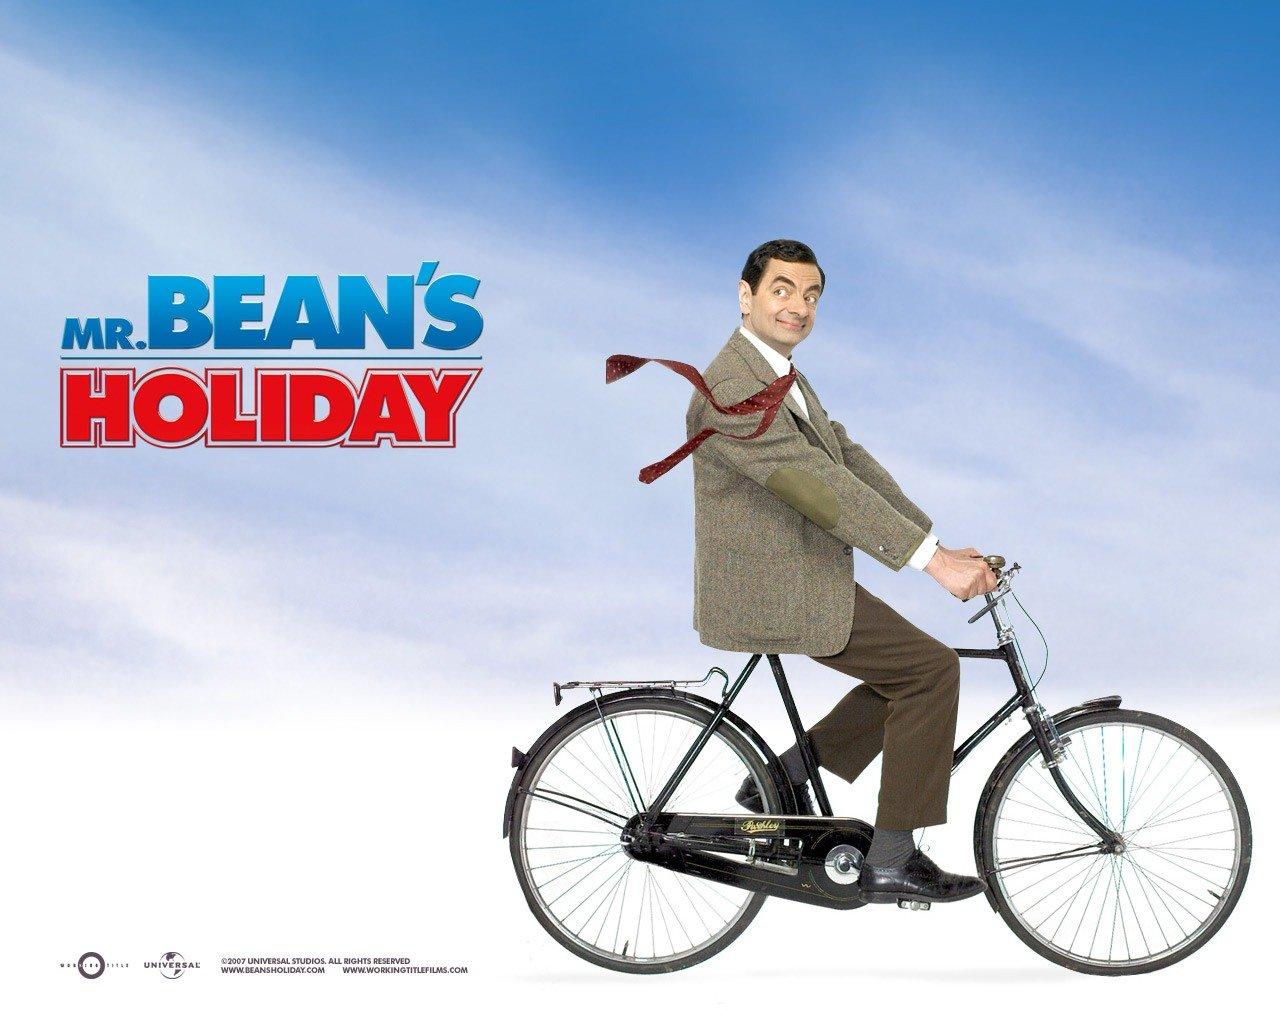 Mr Bean wallpaper HD for desktop background